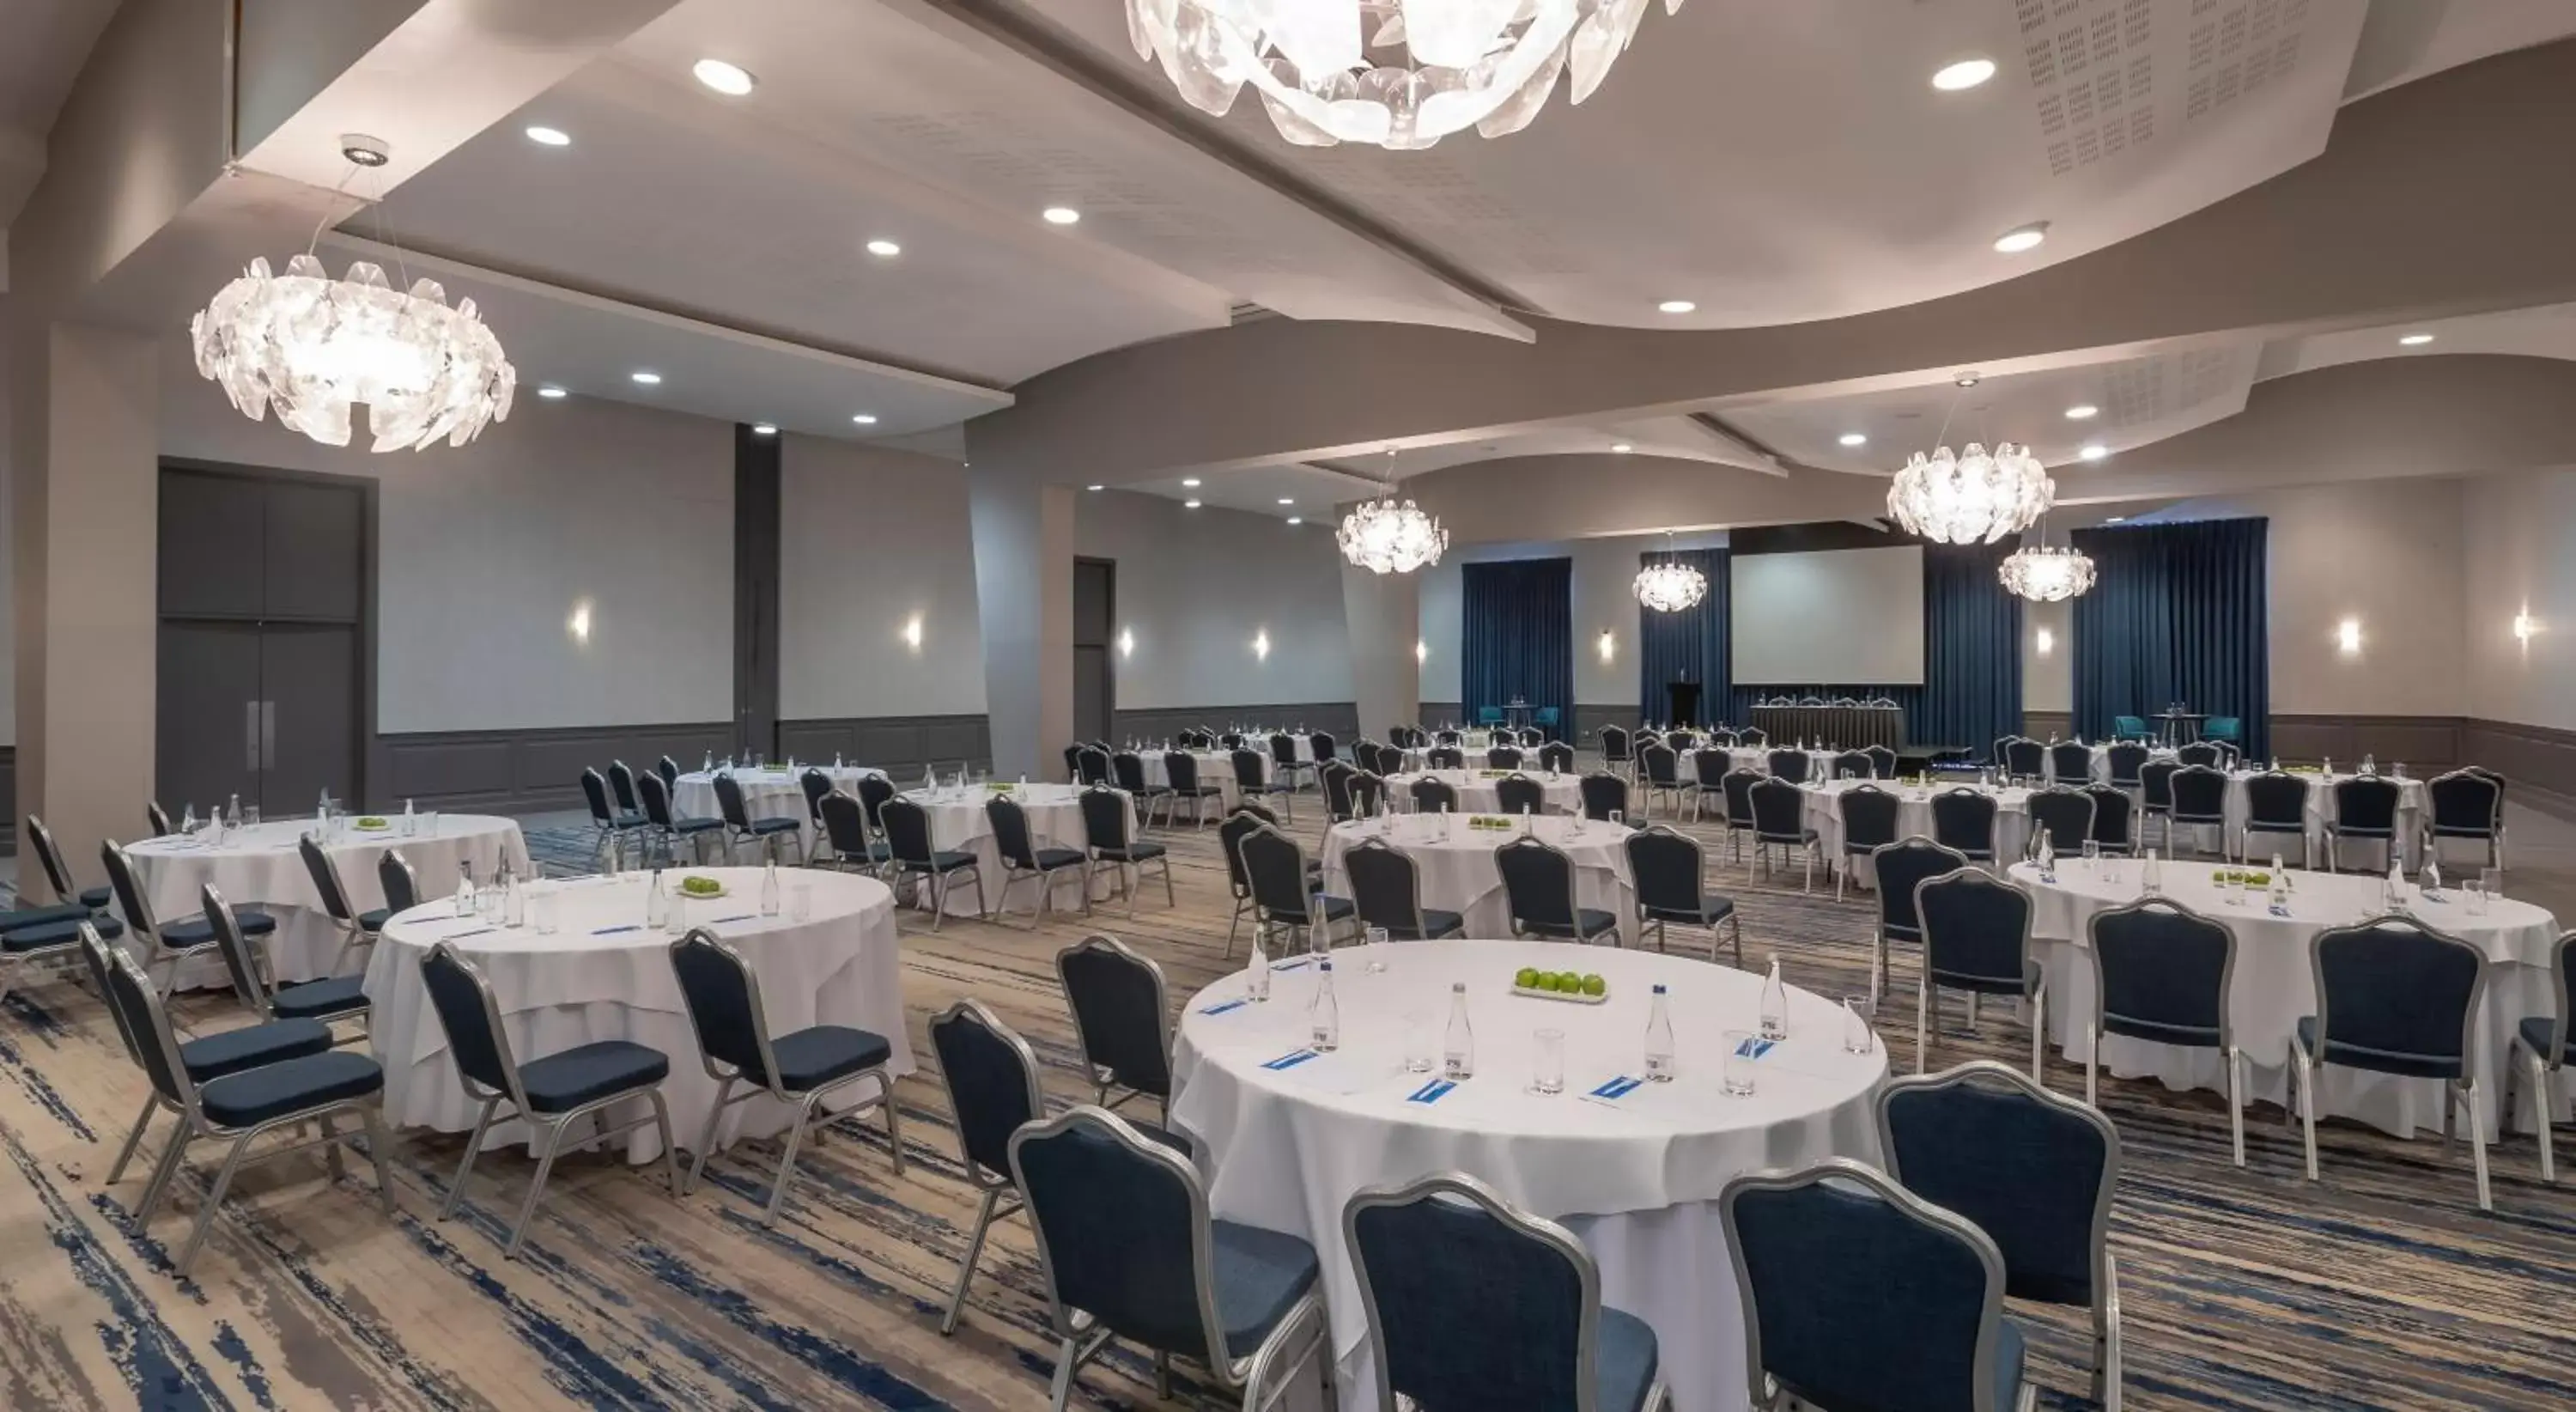 Banquet/Function facilities, Banquet Facilities in Pillo Hotel Ashbourne Leisure Club & Spa